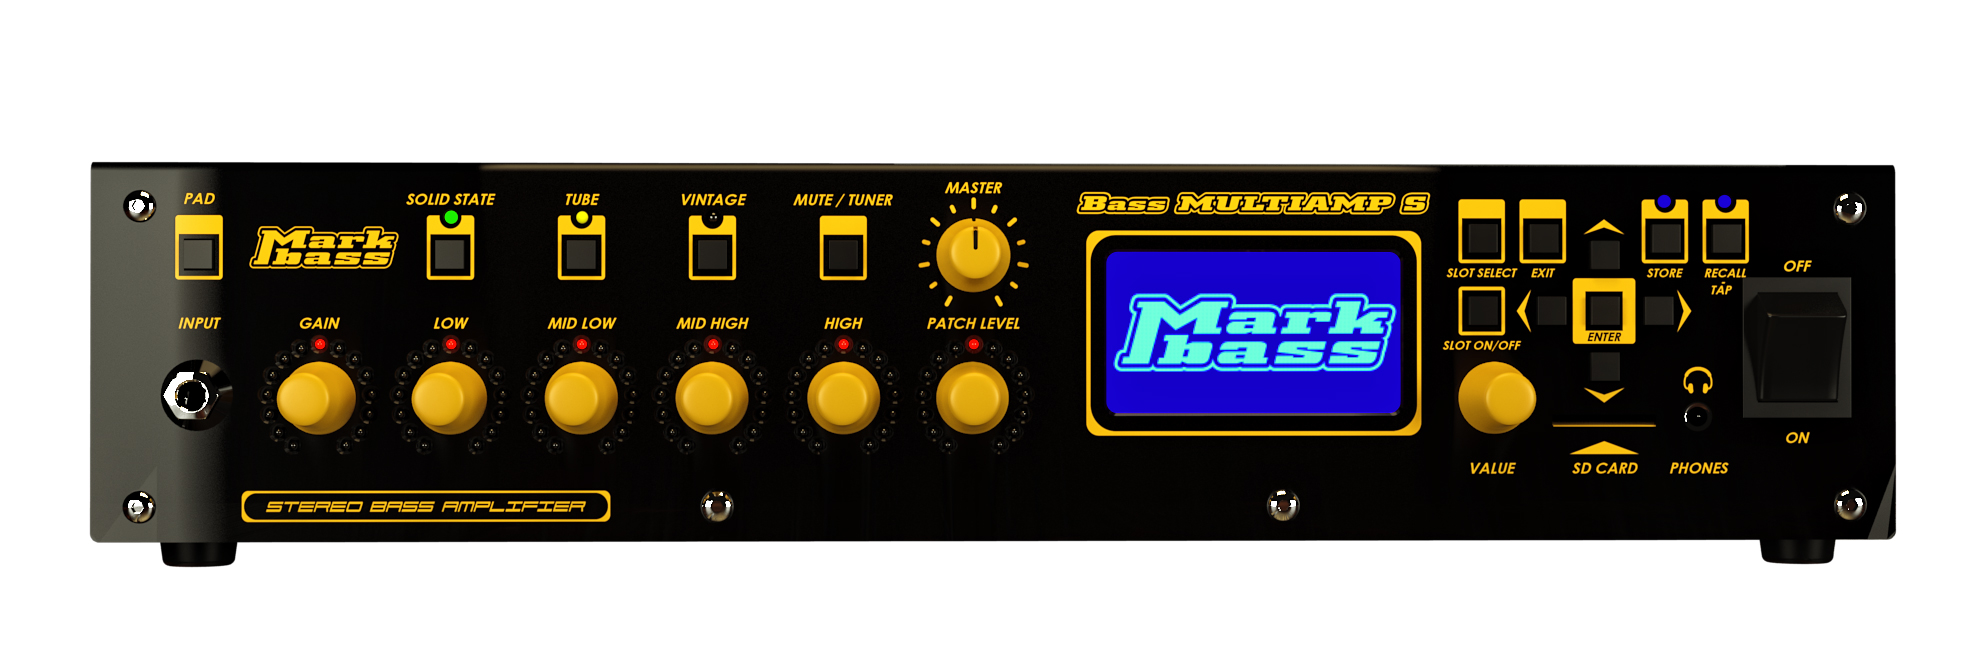 Markbass Bass Multiamp S 2015 Stereo Bass Amplifier 2x500w 4ohms - TÊte Ampli Basse - Variation 1